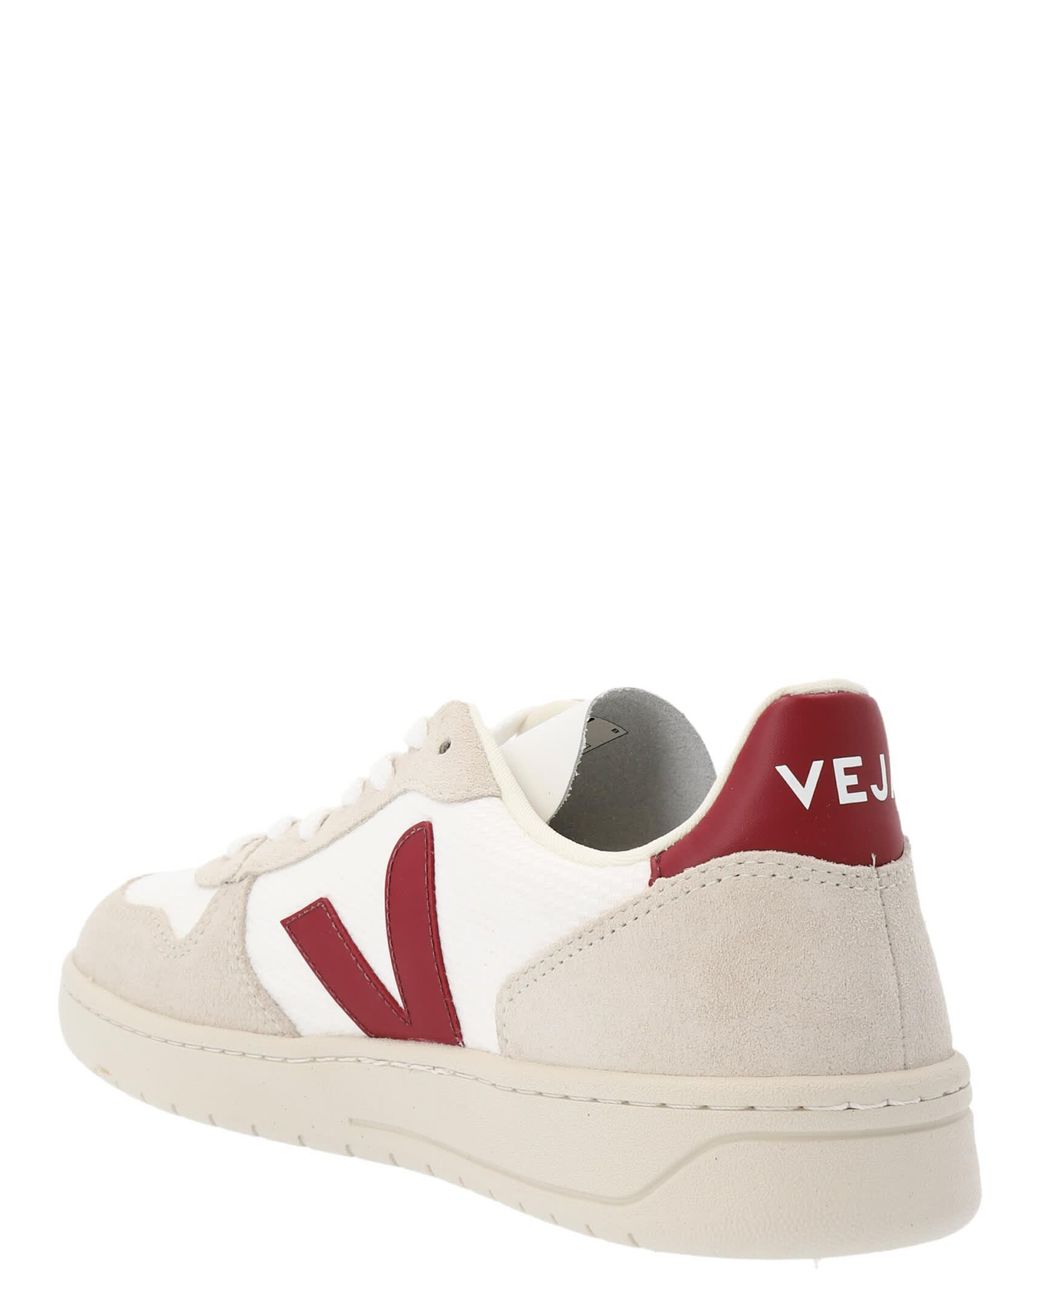 Veja Leather V-10 Sneakers in Bordeaux (Red) for Men | Lyst